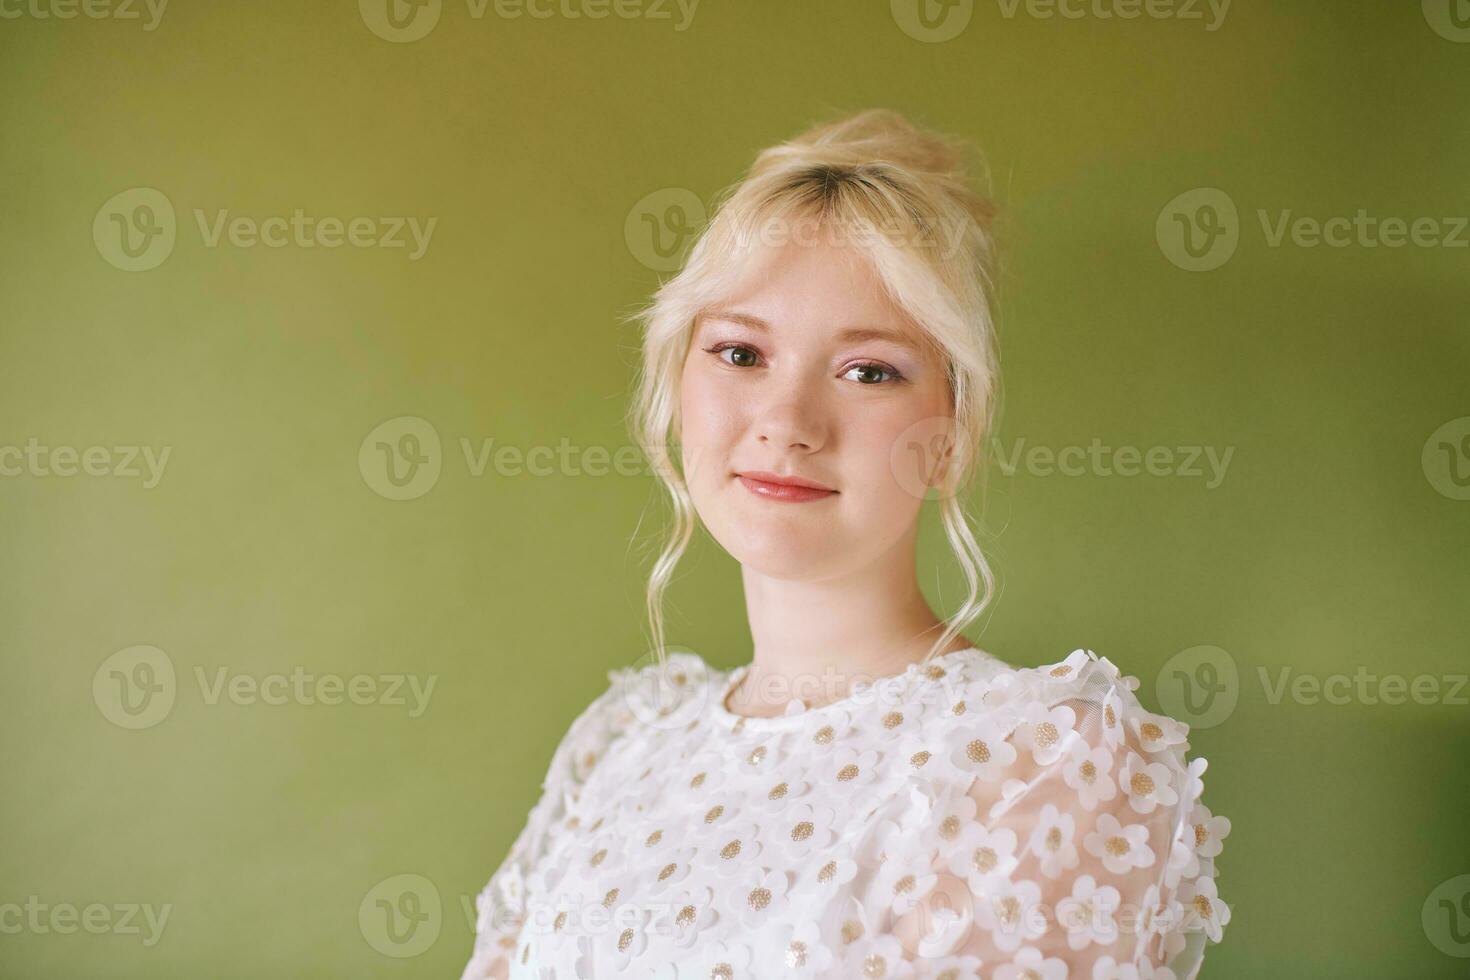 beleza retrato do bonita jovem 15 - 16 ano velho adolescência menina vestindo branco vestir posando em verde fundo foto